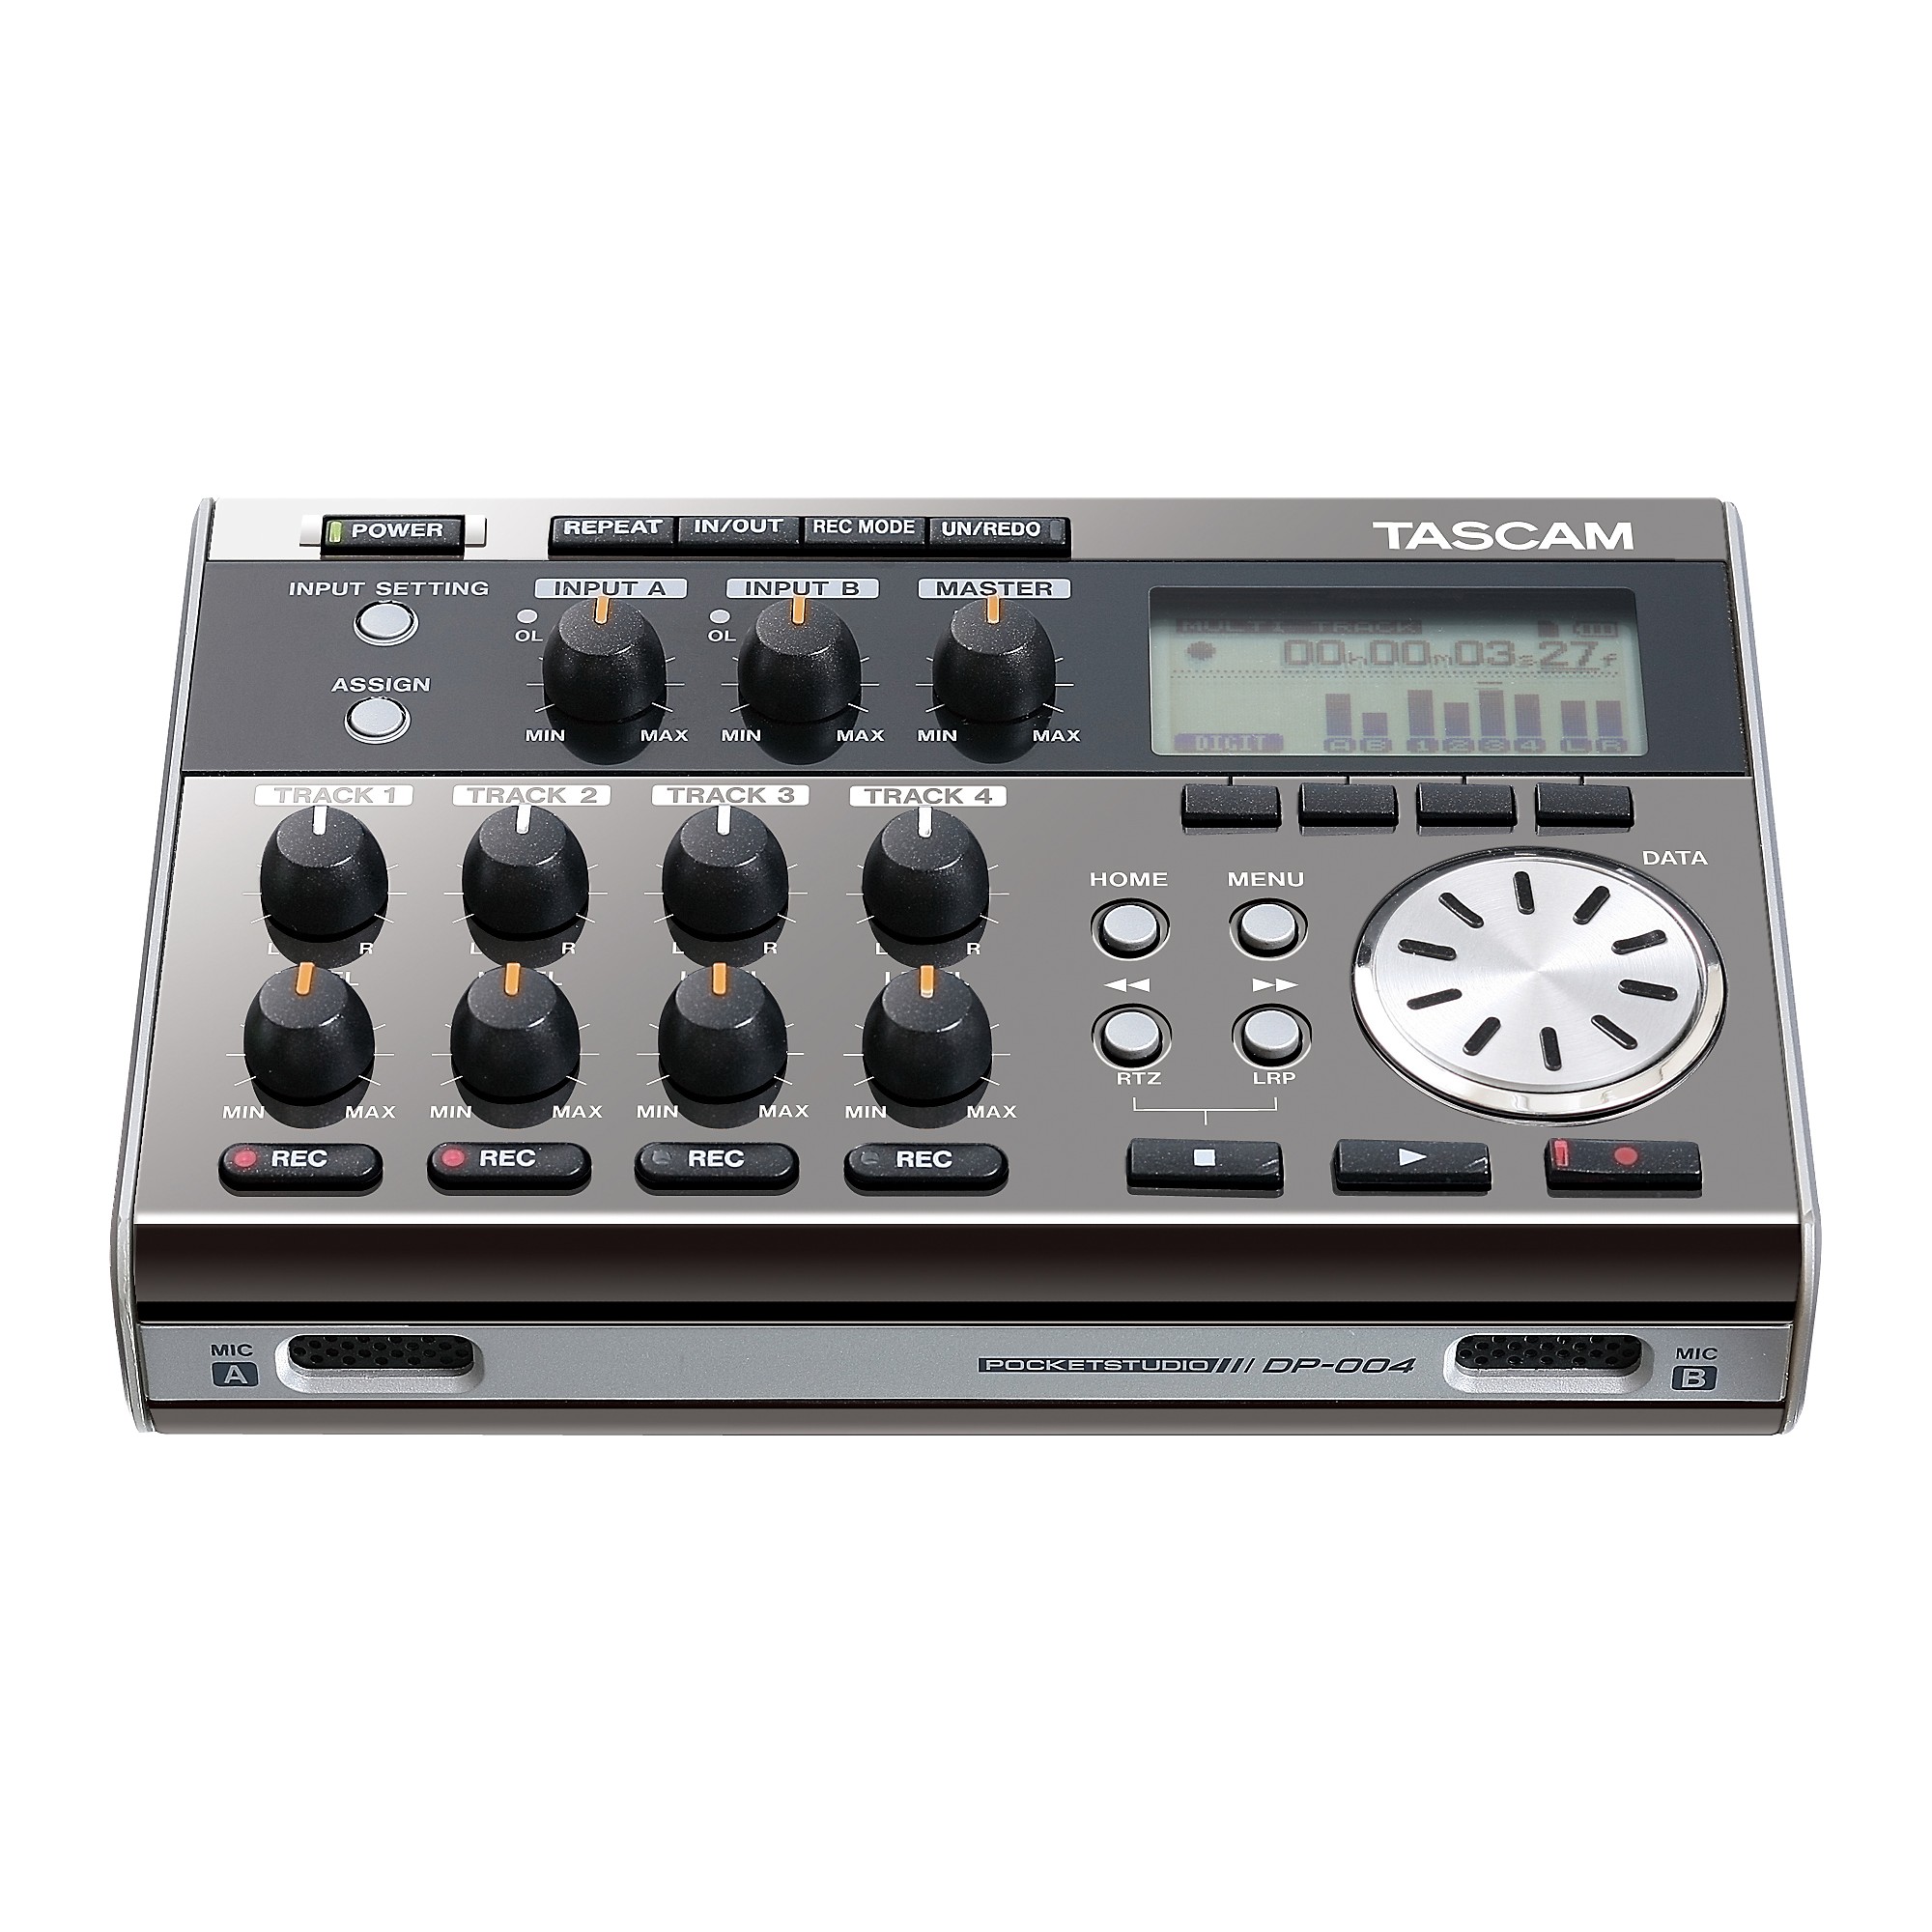 TASCAM DP-004 Portable 4-track Digital Multi-track Recorder Ltd 